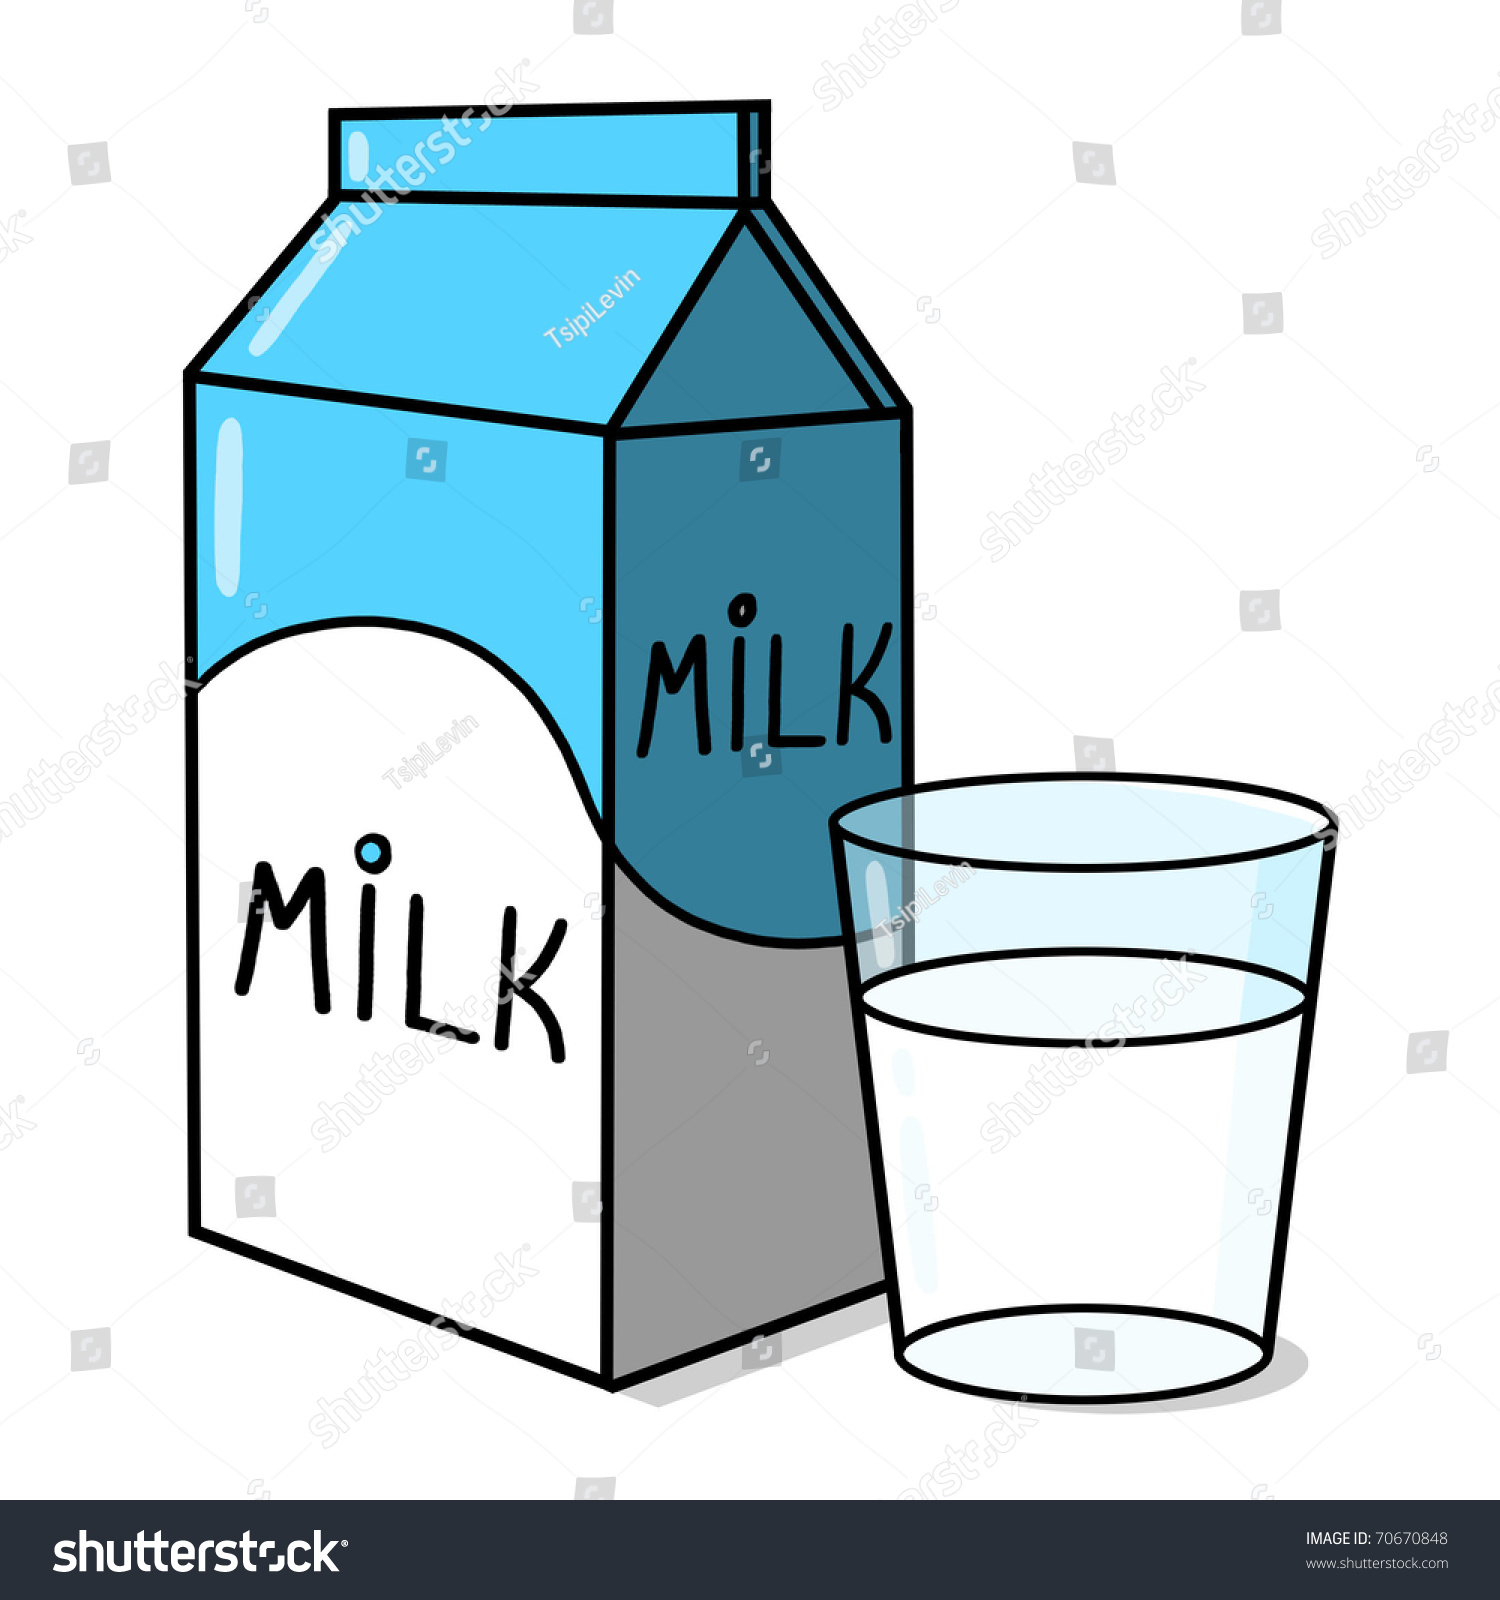 Milk Carton And A Clear Glass Of Milk Royalty Free Stock Photo Avopix Com